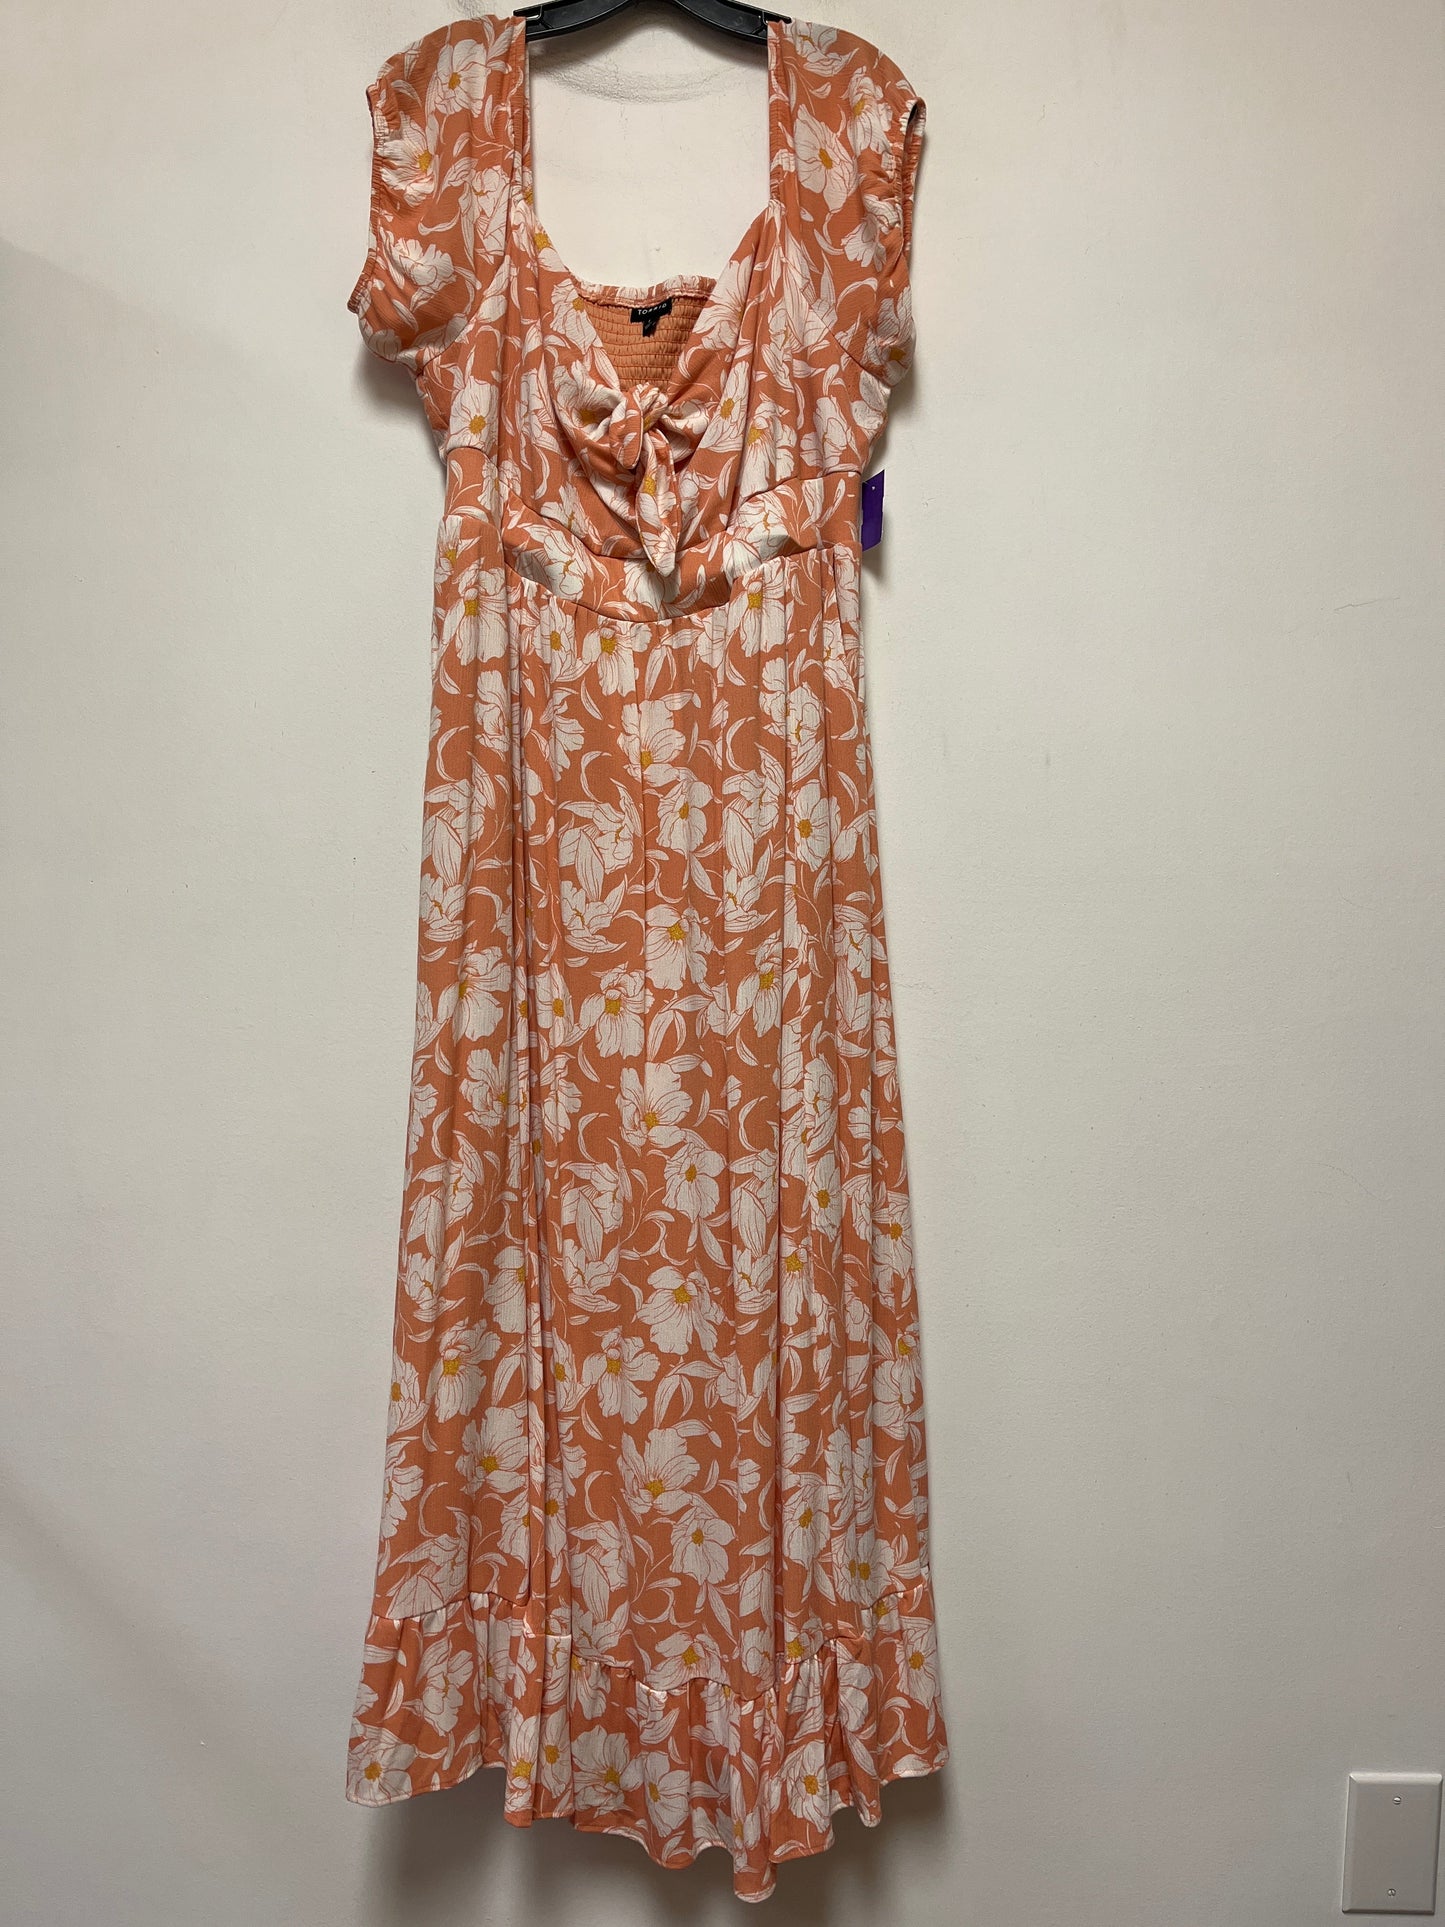 Floral Print Dress Casual Maxi Torrid, Size 1x